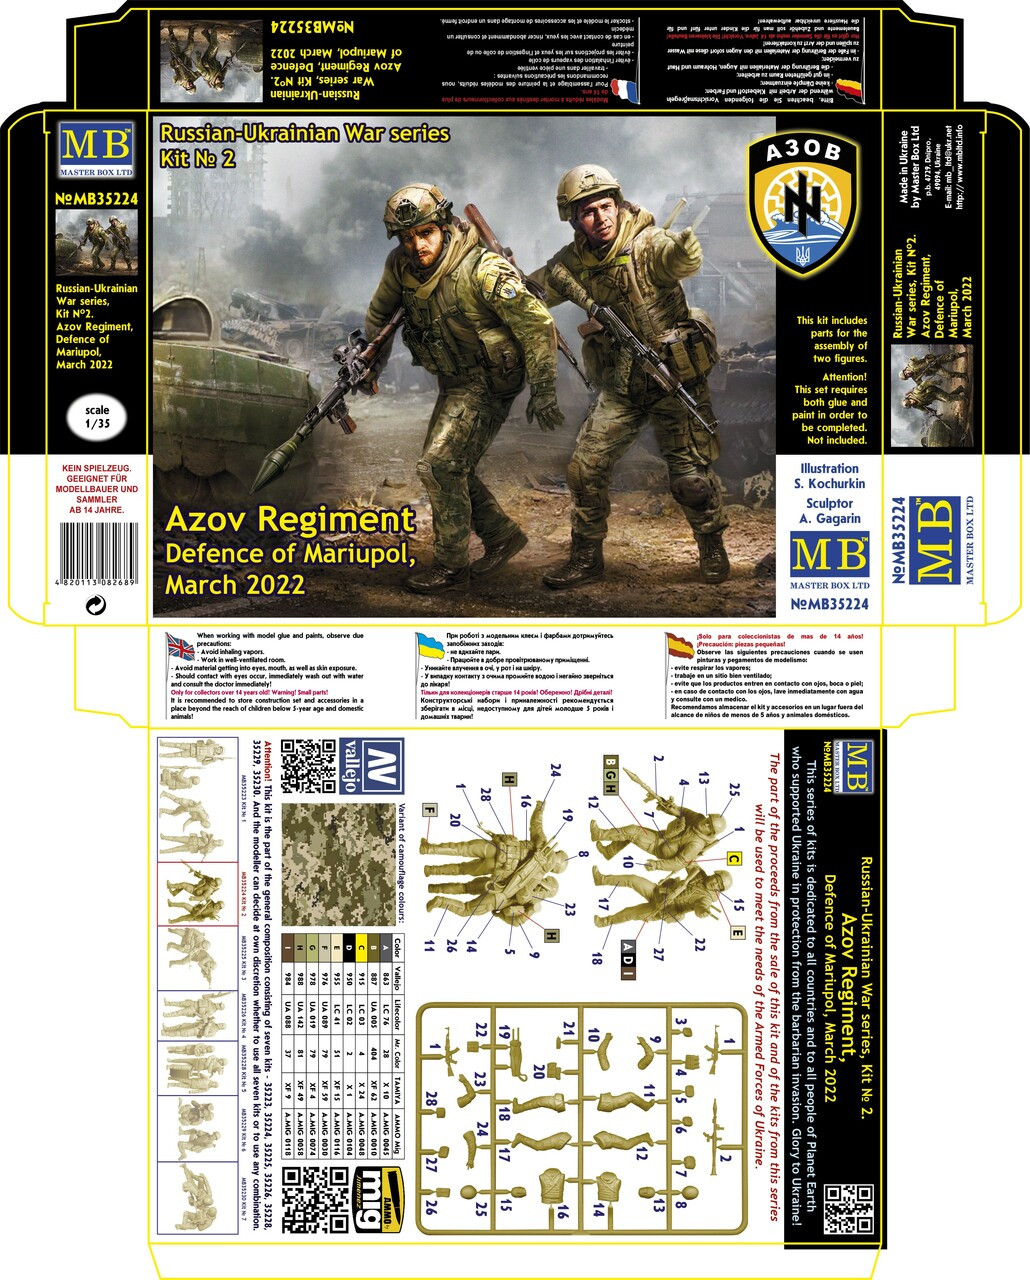 1/35 Russian-Ukrainian War series Azov Regiment, Defence of Mariupol, March 2022 - 35224